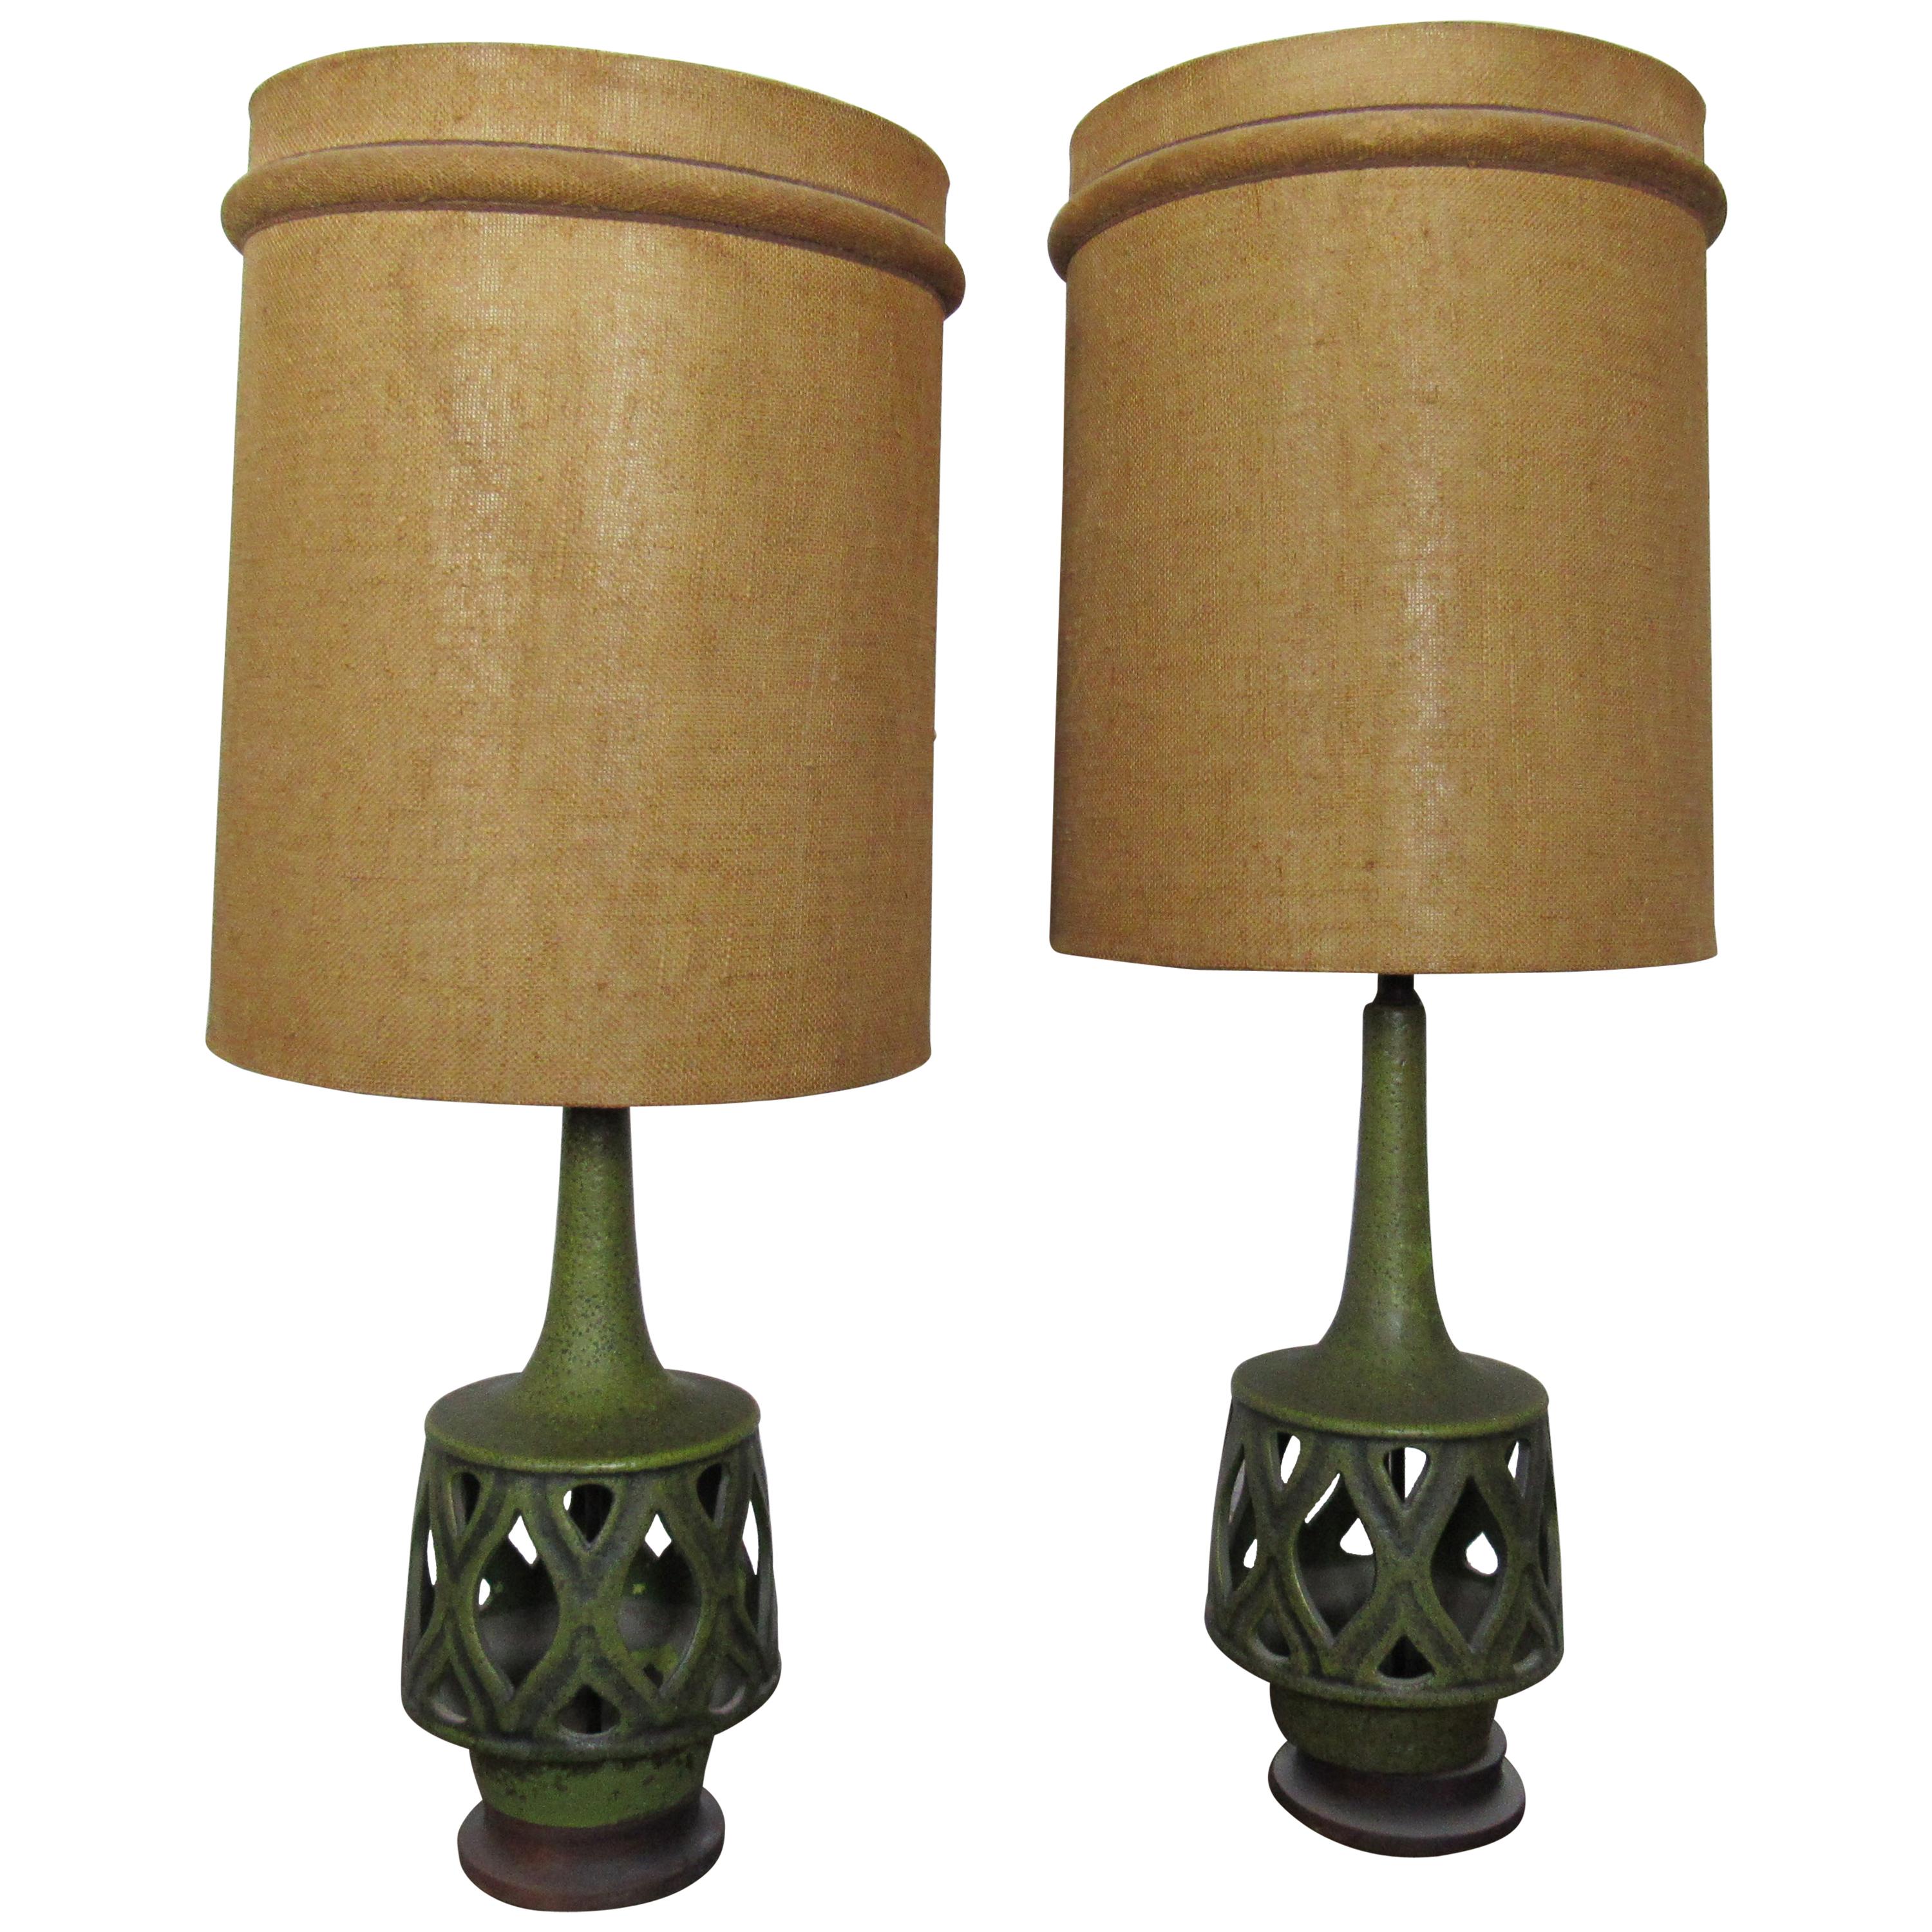 Pair of Vintage Ceramic Lamps